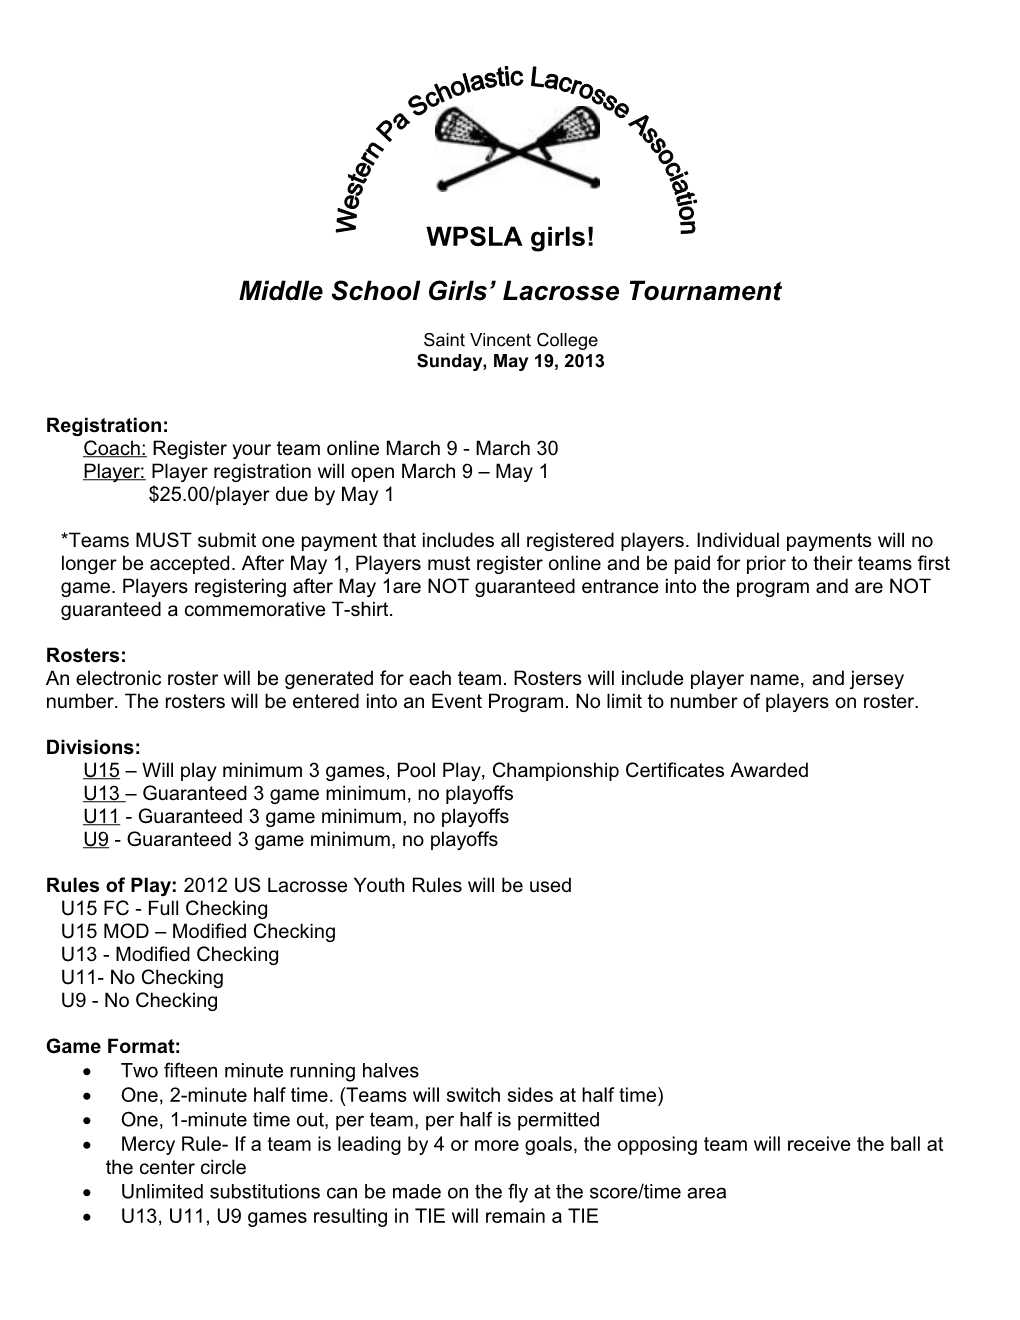 Western PA Scholastic Lacrosse Association